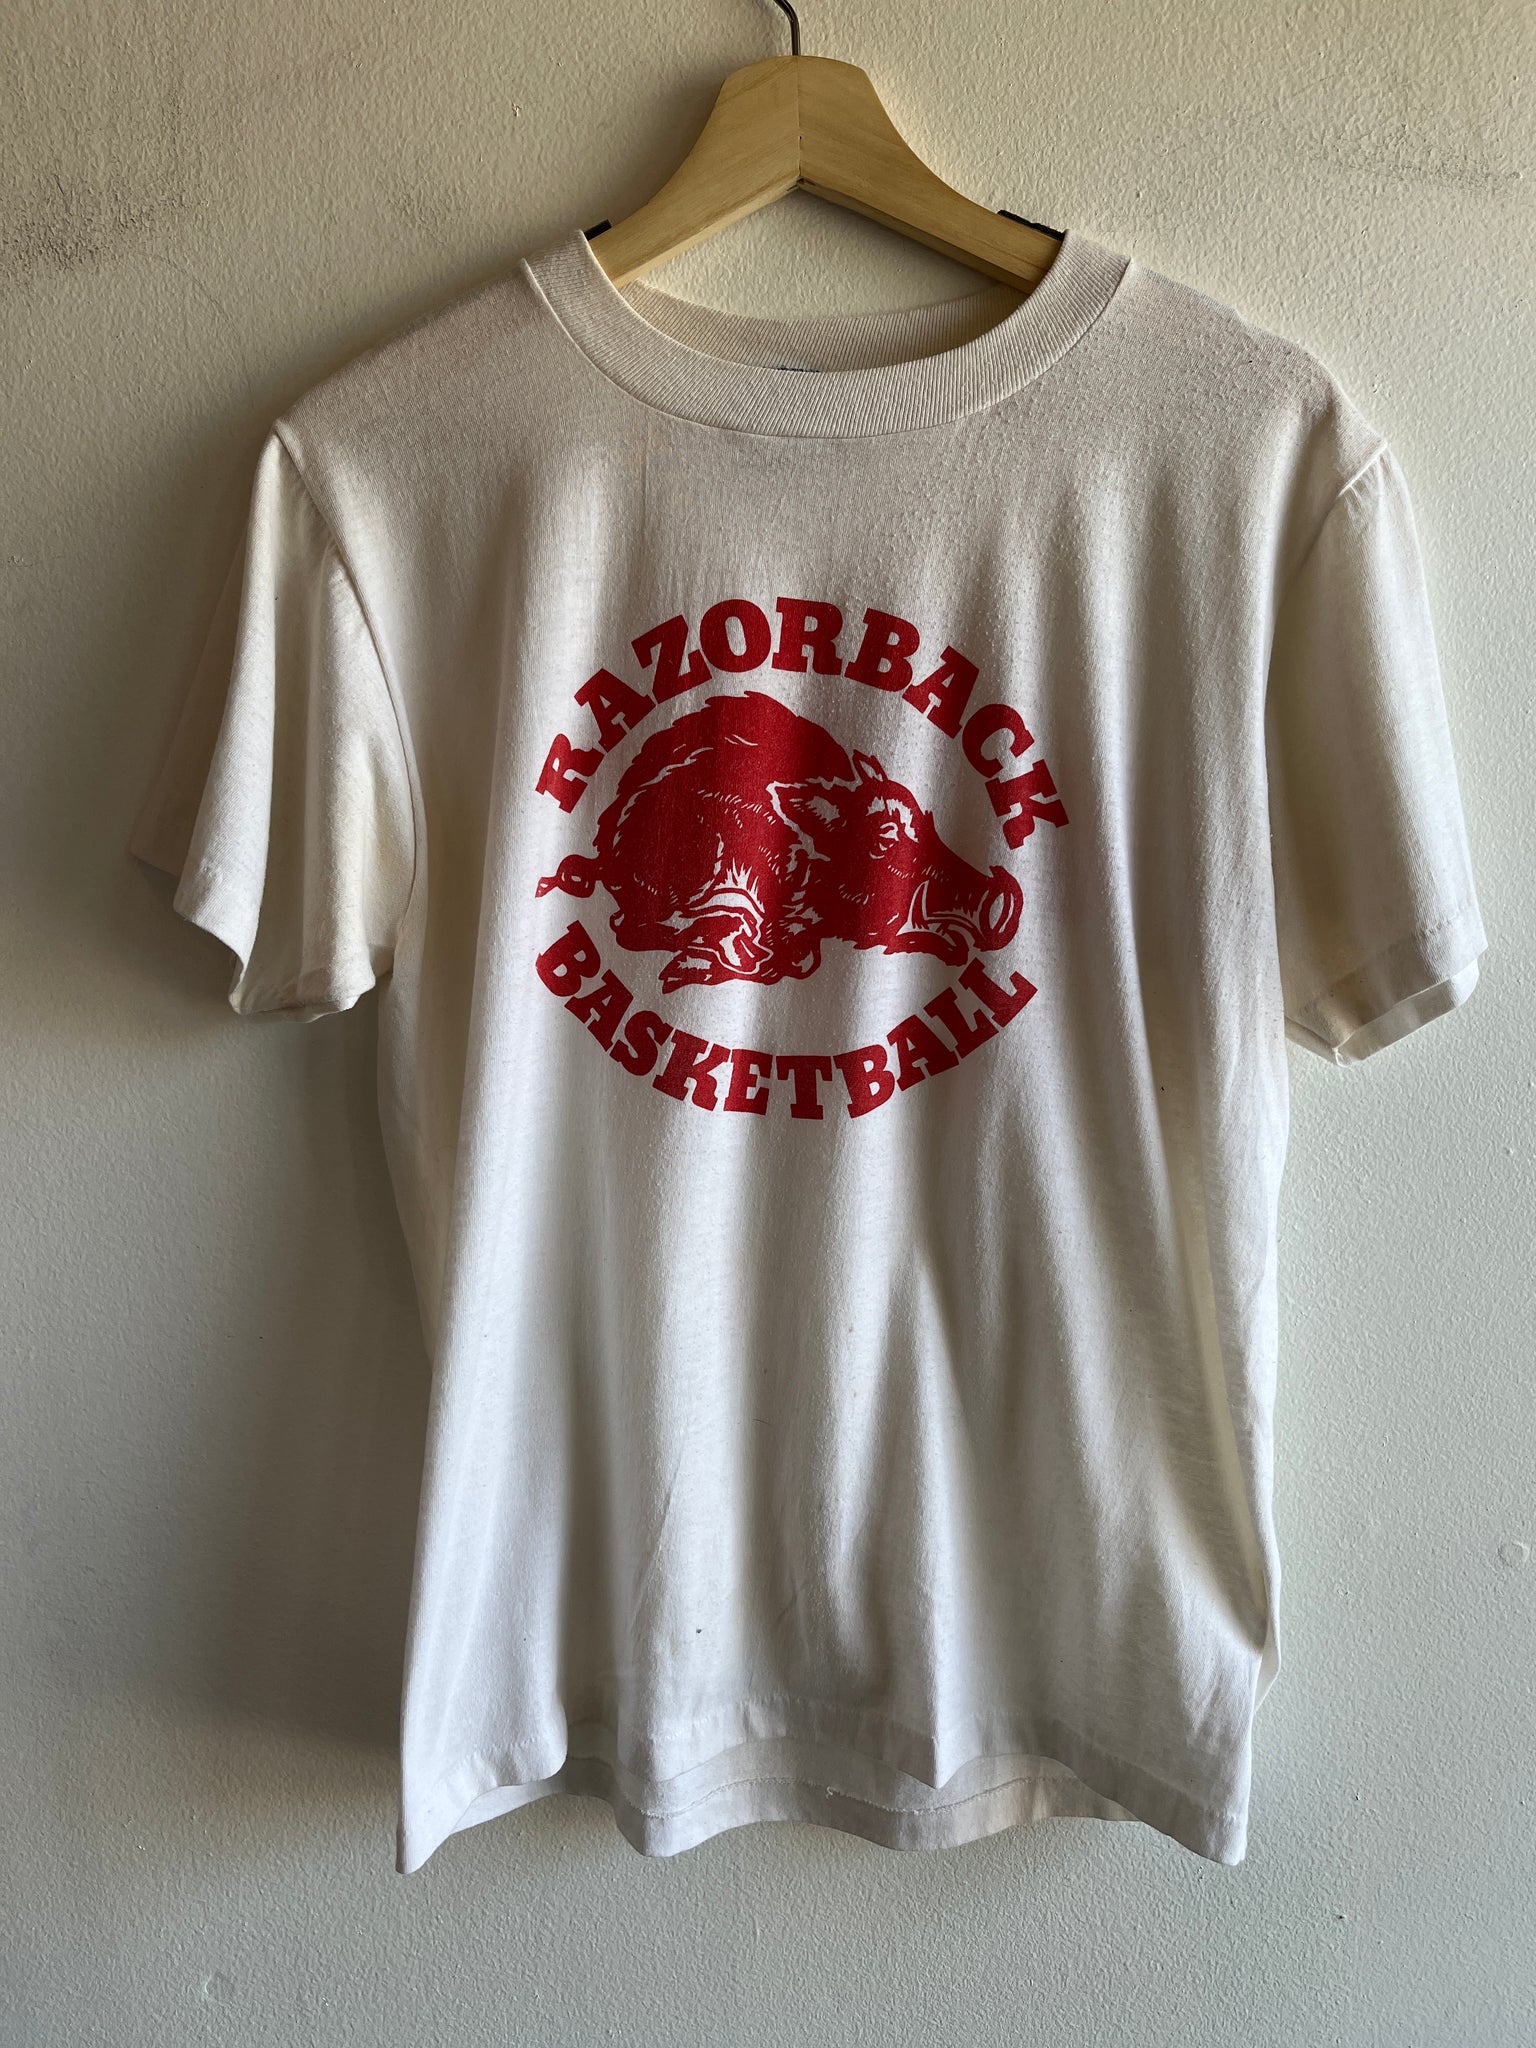 Vintage 1980’s University of Arkansas Basketball T-shirt